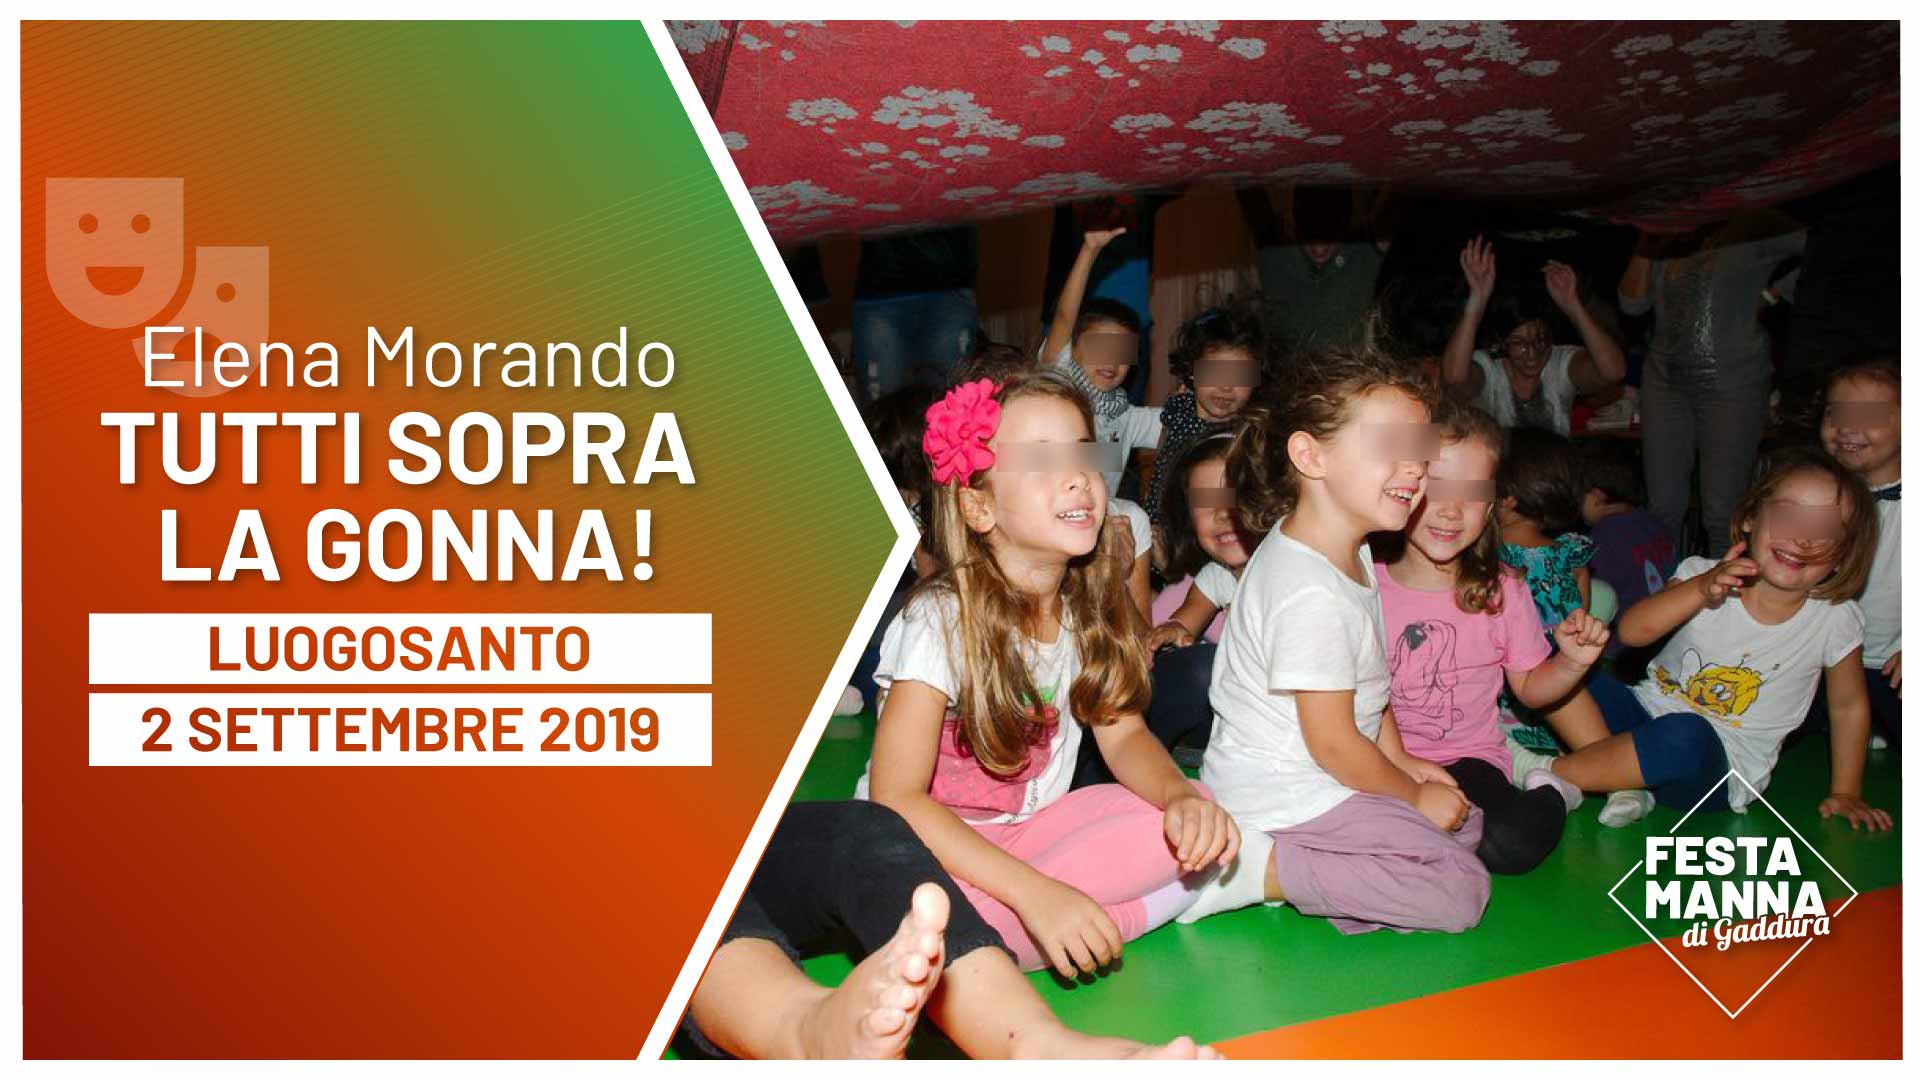 “Tutti sopra la gonna!”, lectures pour enfants par Elena Morando | Festa Manna di Gaddura 2019